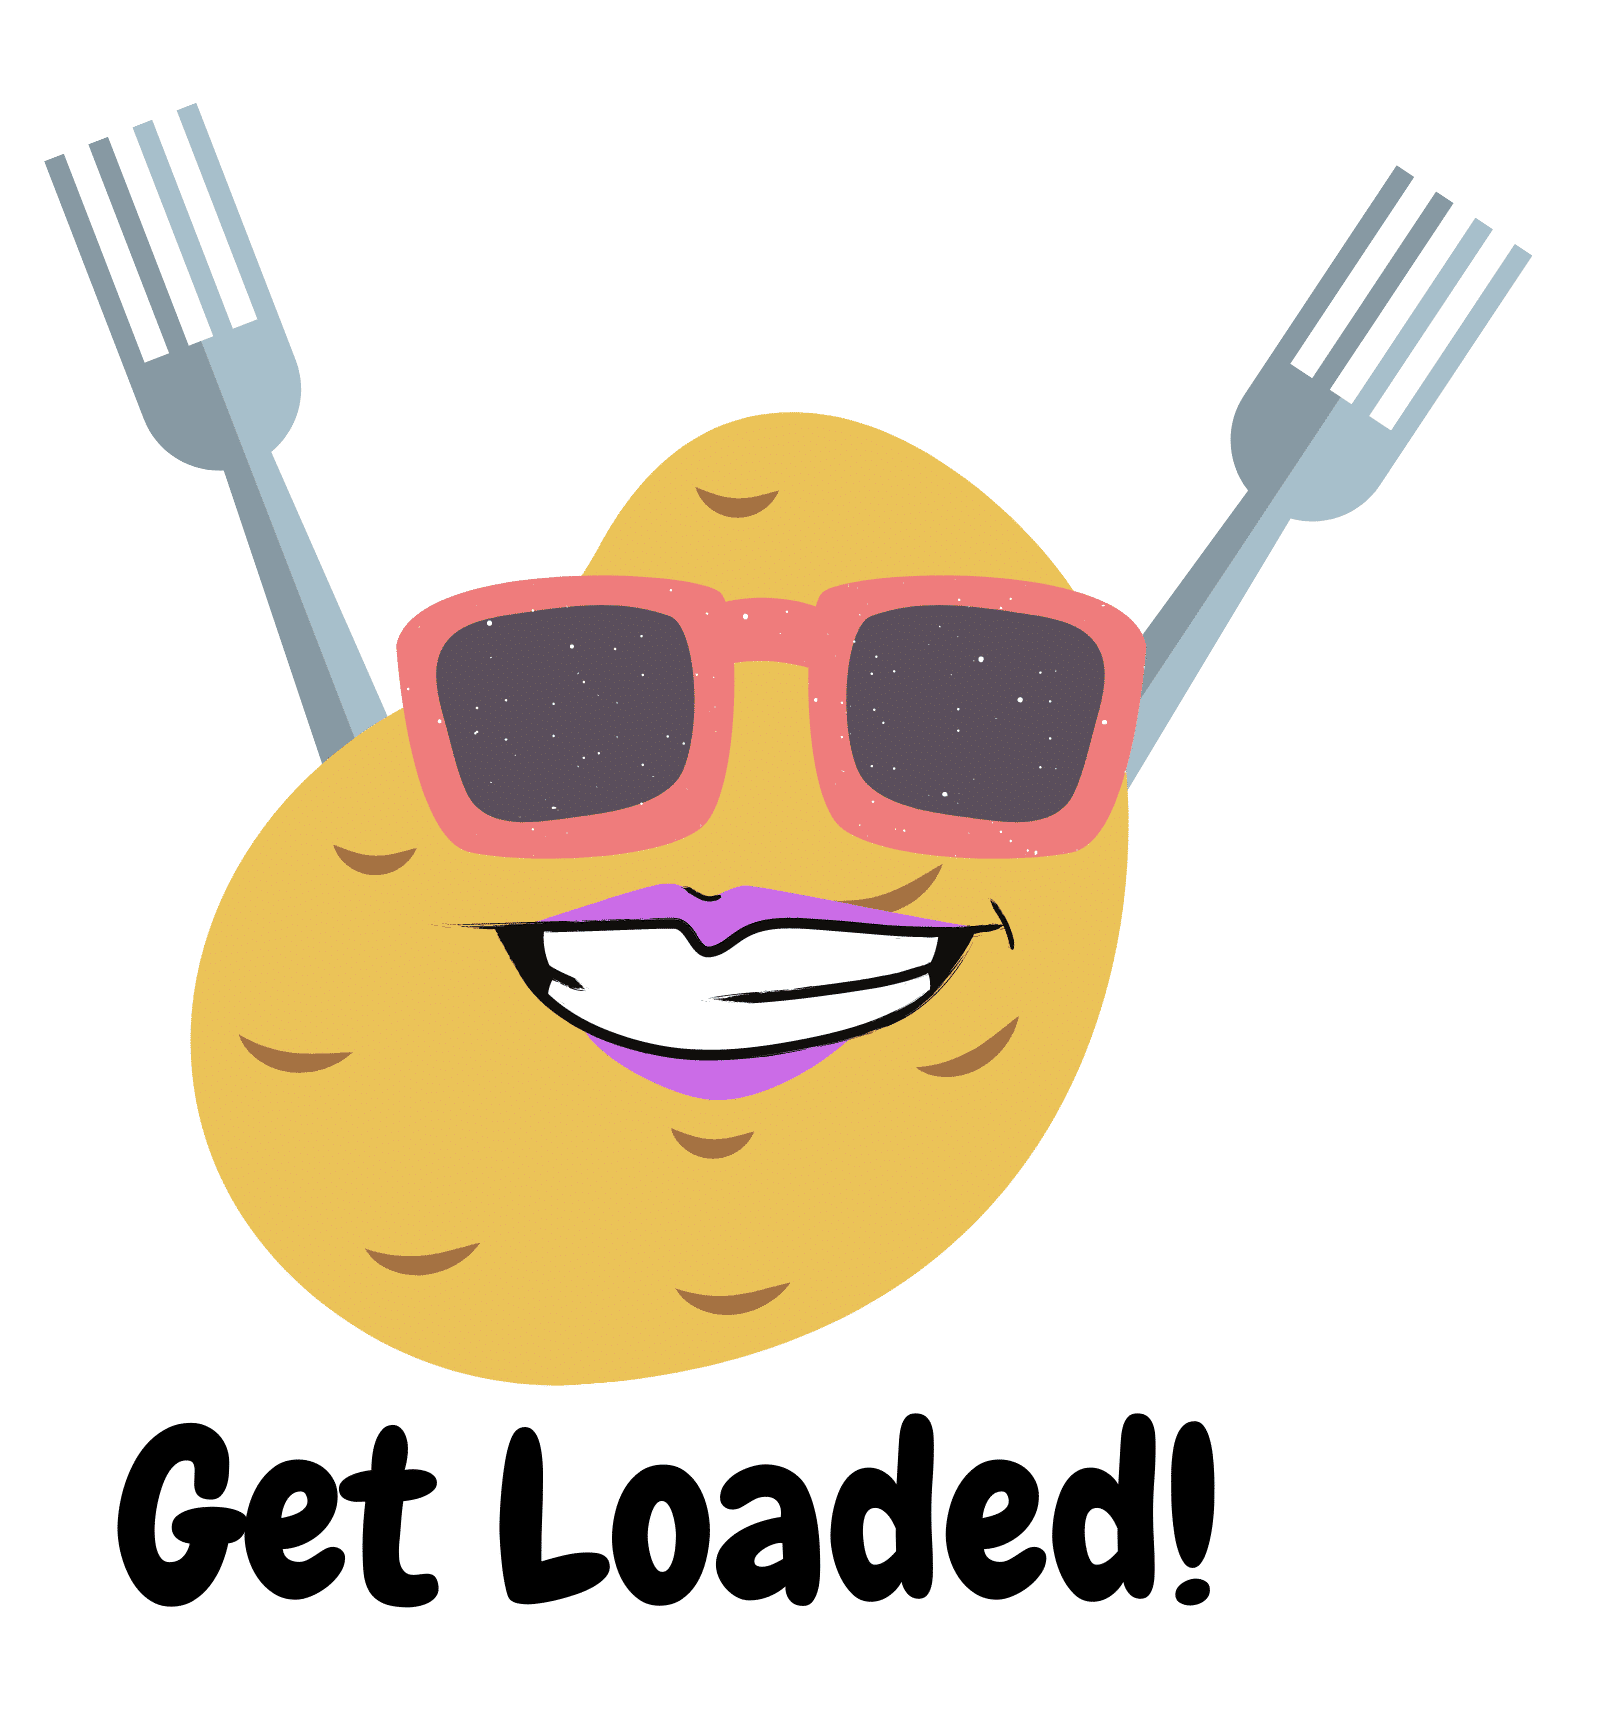 Potato wearing sunglasses and purple lipstick. Text reads: Get Loaded!